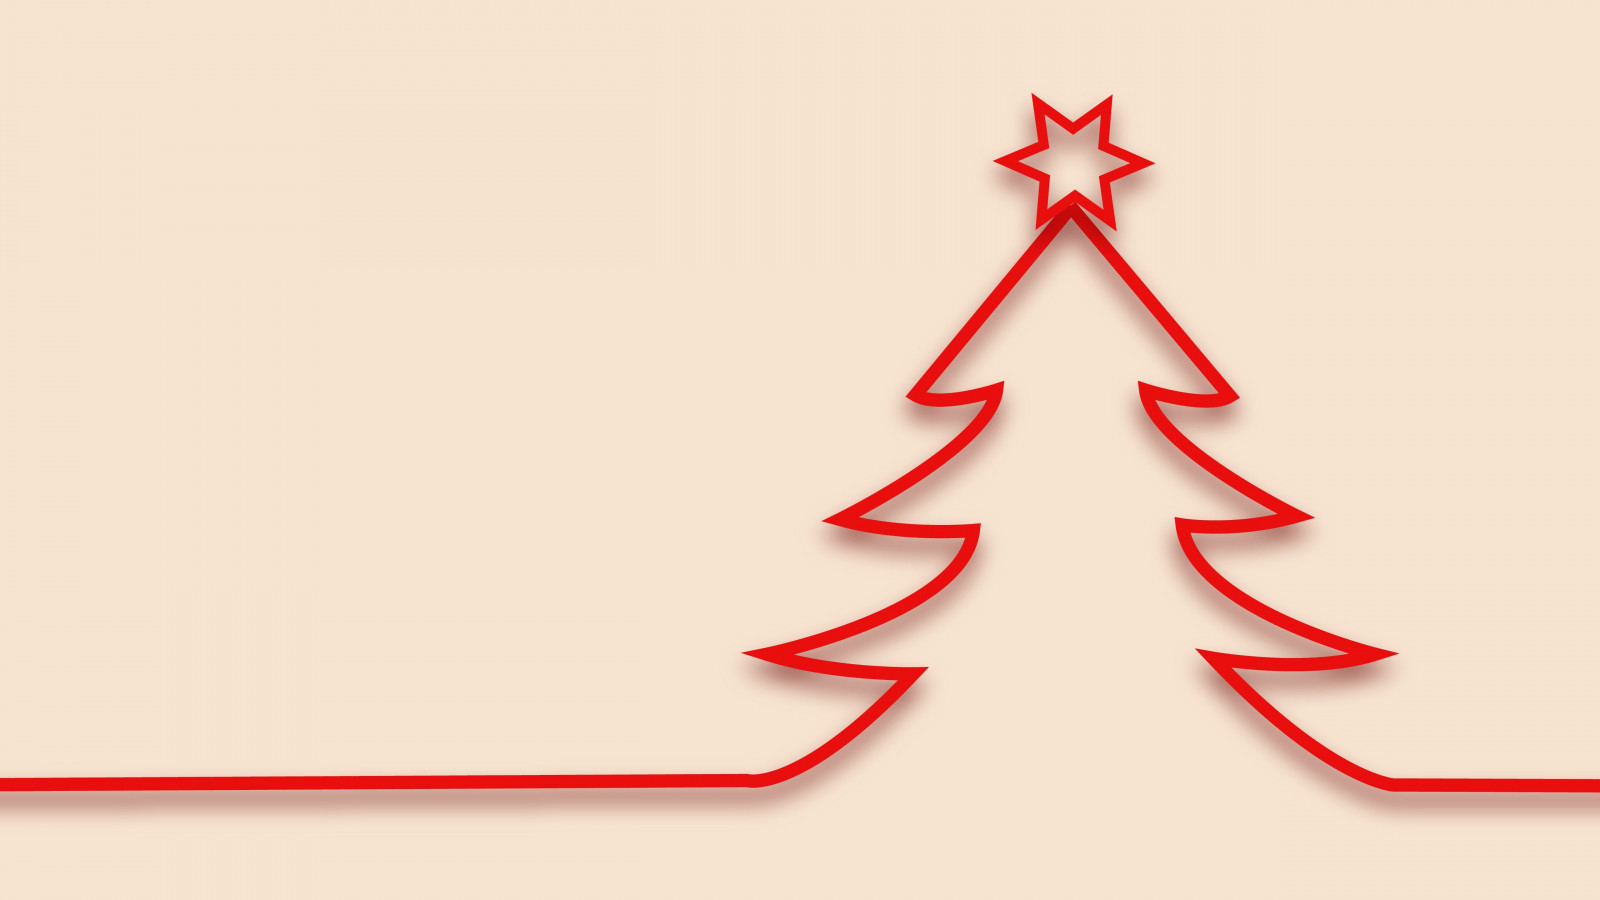 Red minimalistic Christmas tree design wallpaper 1600x900